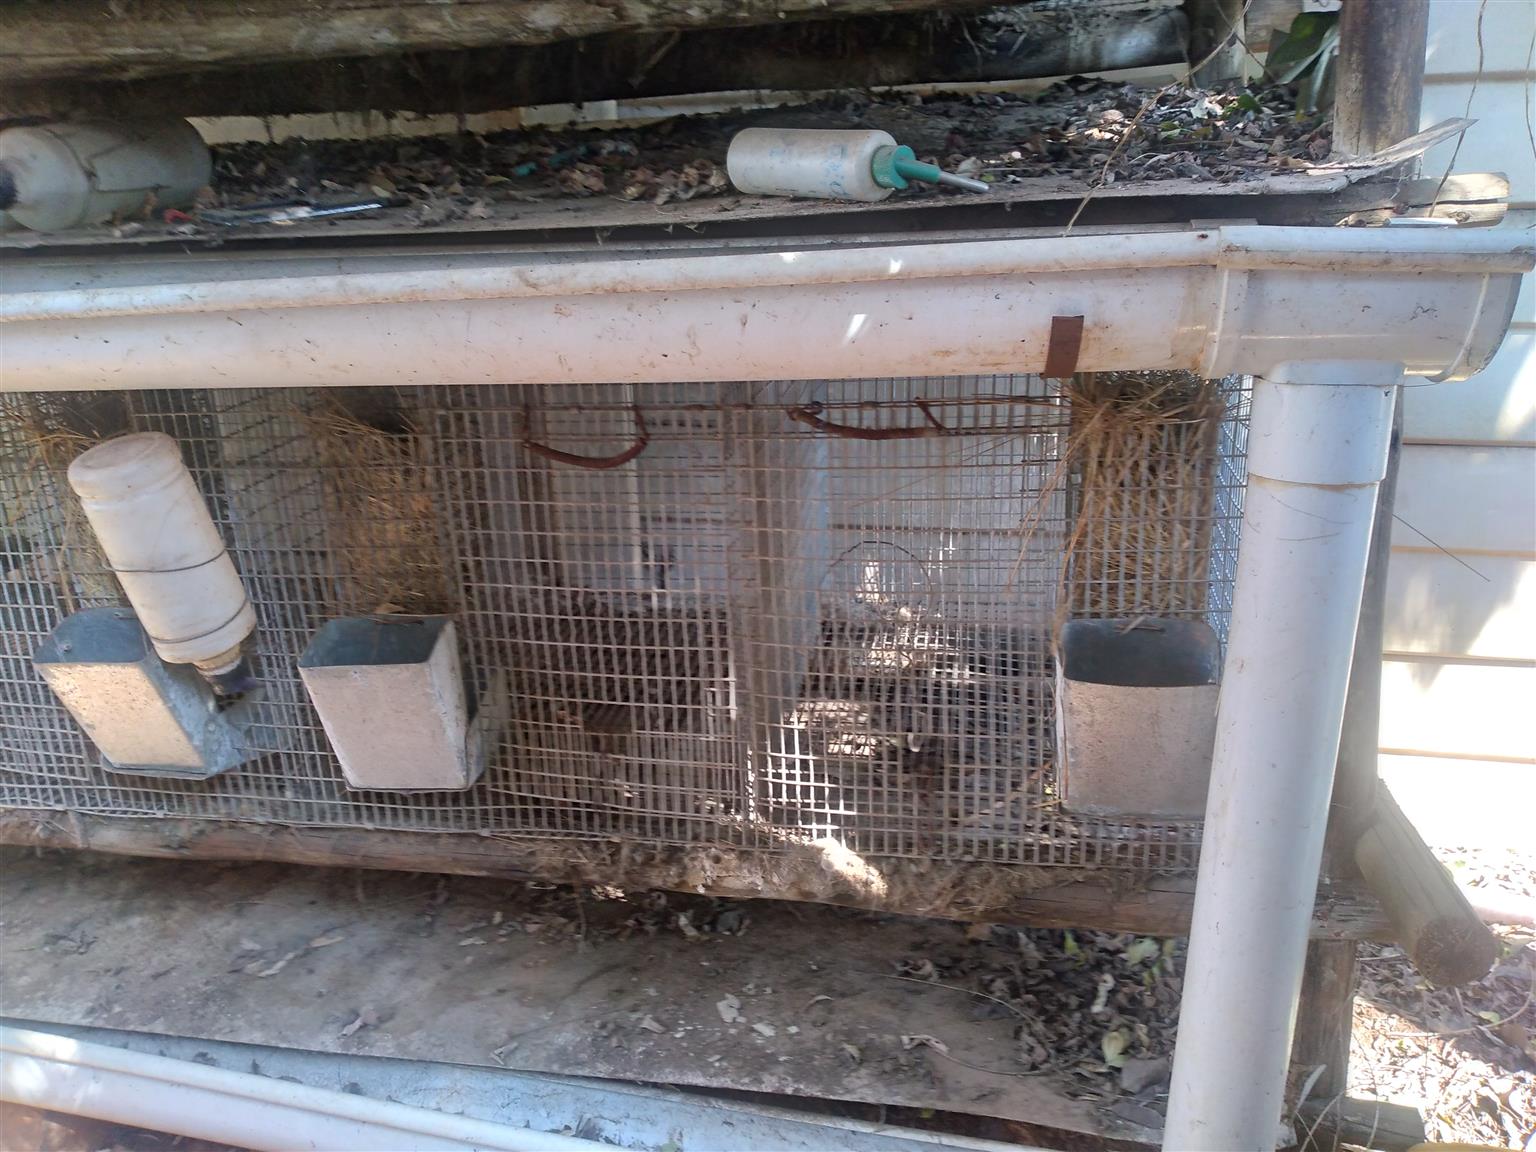 Rabbit Cages